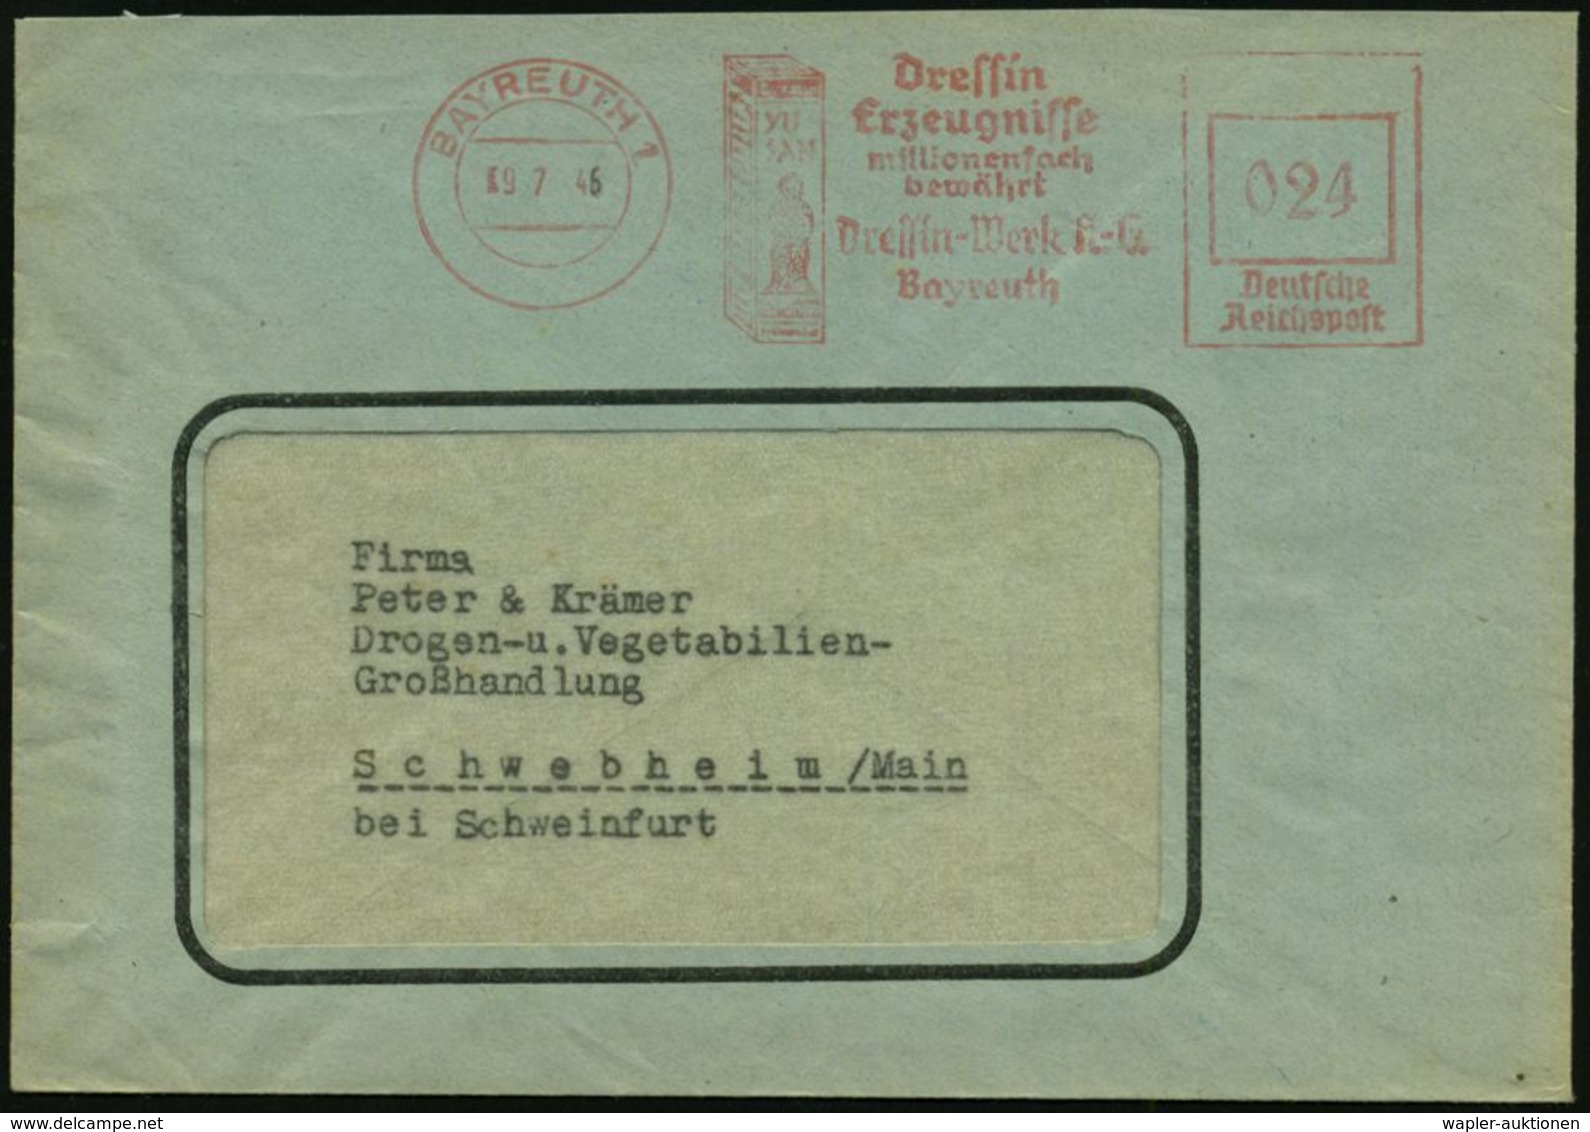 HAAR / BART / RASUR / FRISEUR : BAYREUTH 1/ YU SAN/ Dressin/ Erzeugnisse../ Dressin-Werke K.G. 1945 (9.7.) Aptierter AFS - Farmacia